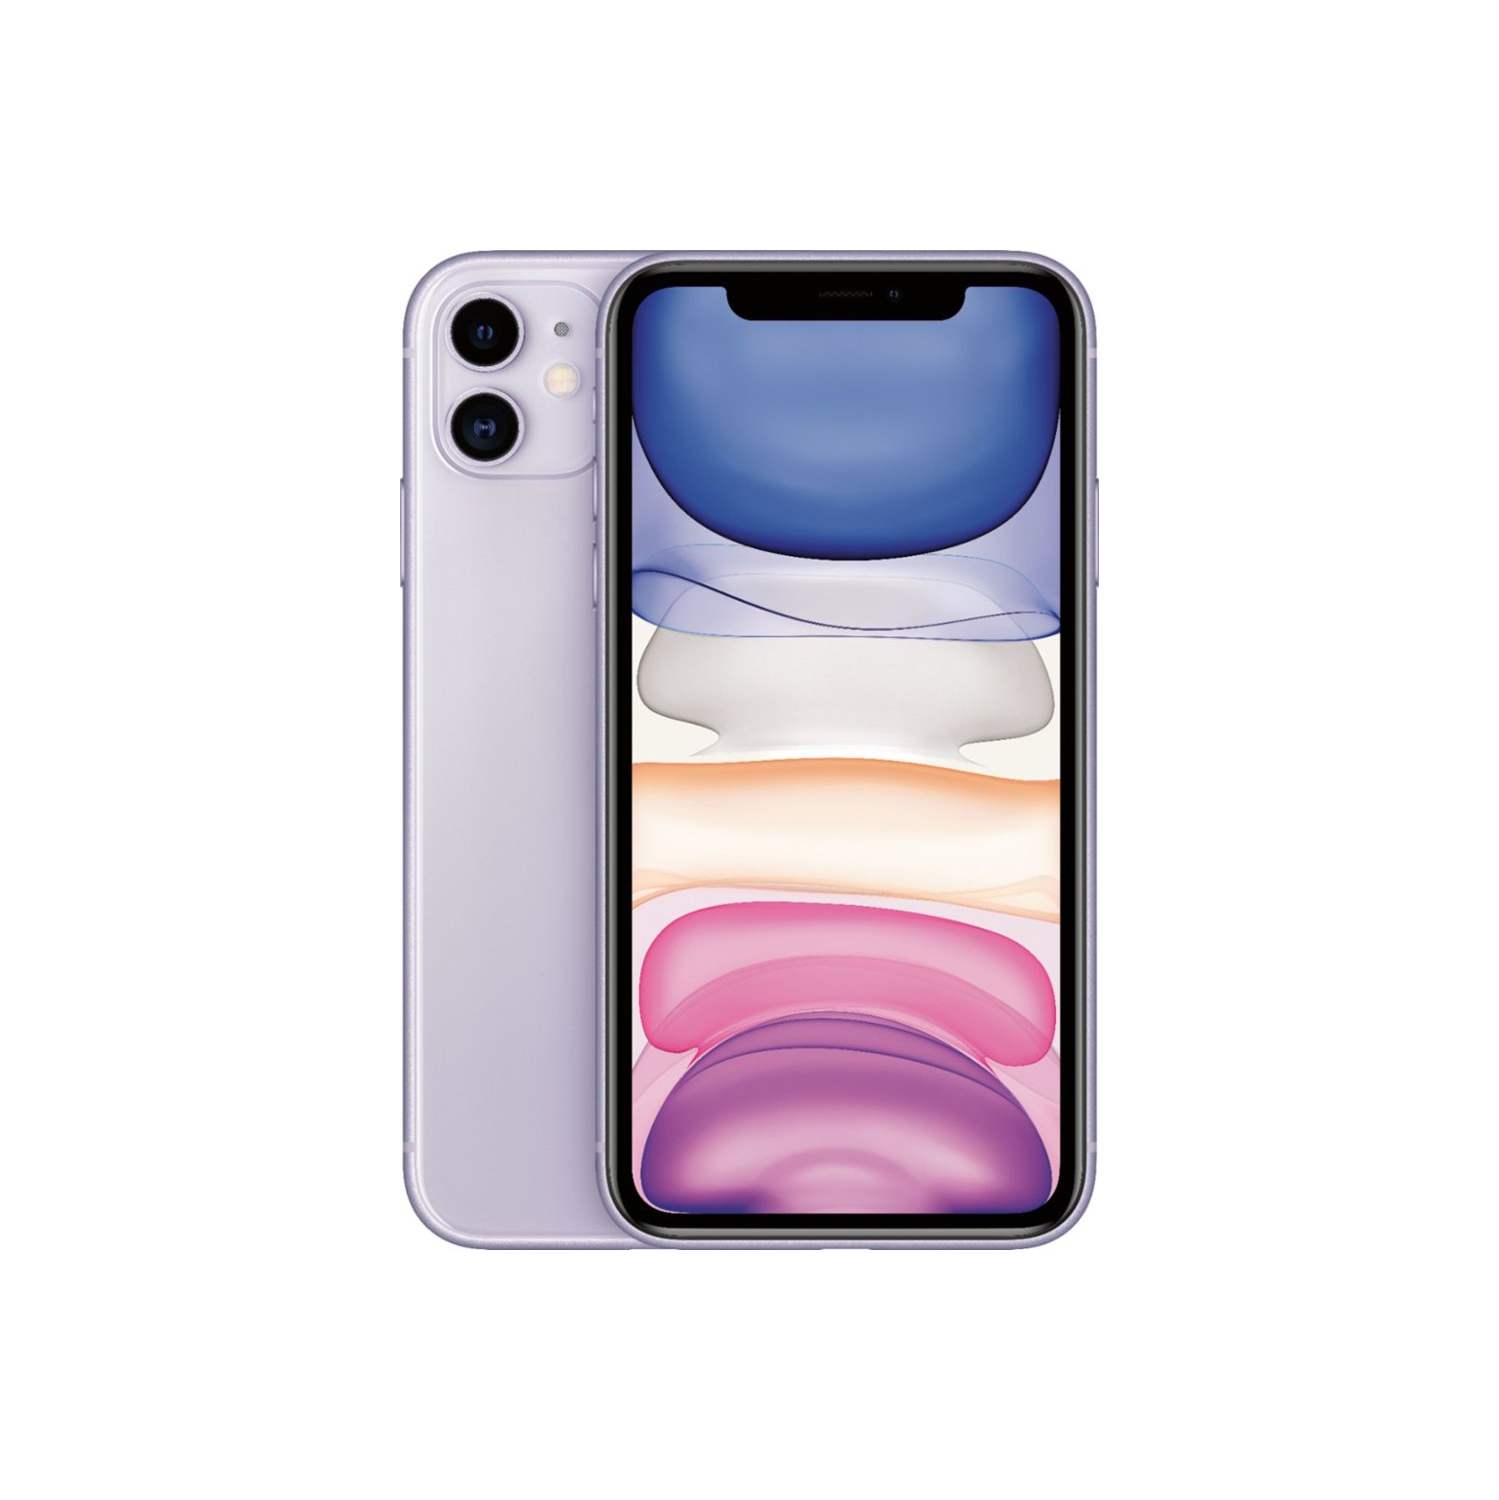 Apple iPhone 11 128GB Smartphone - Purple - Unlocked - Open Box